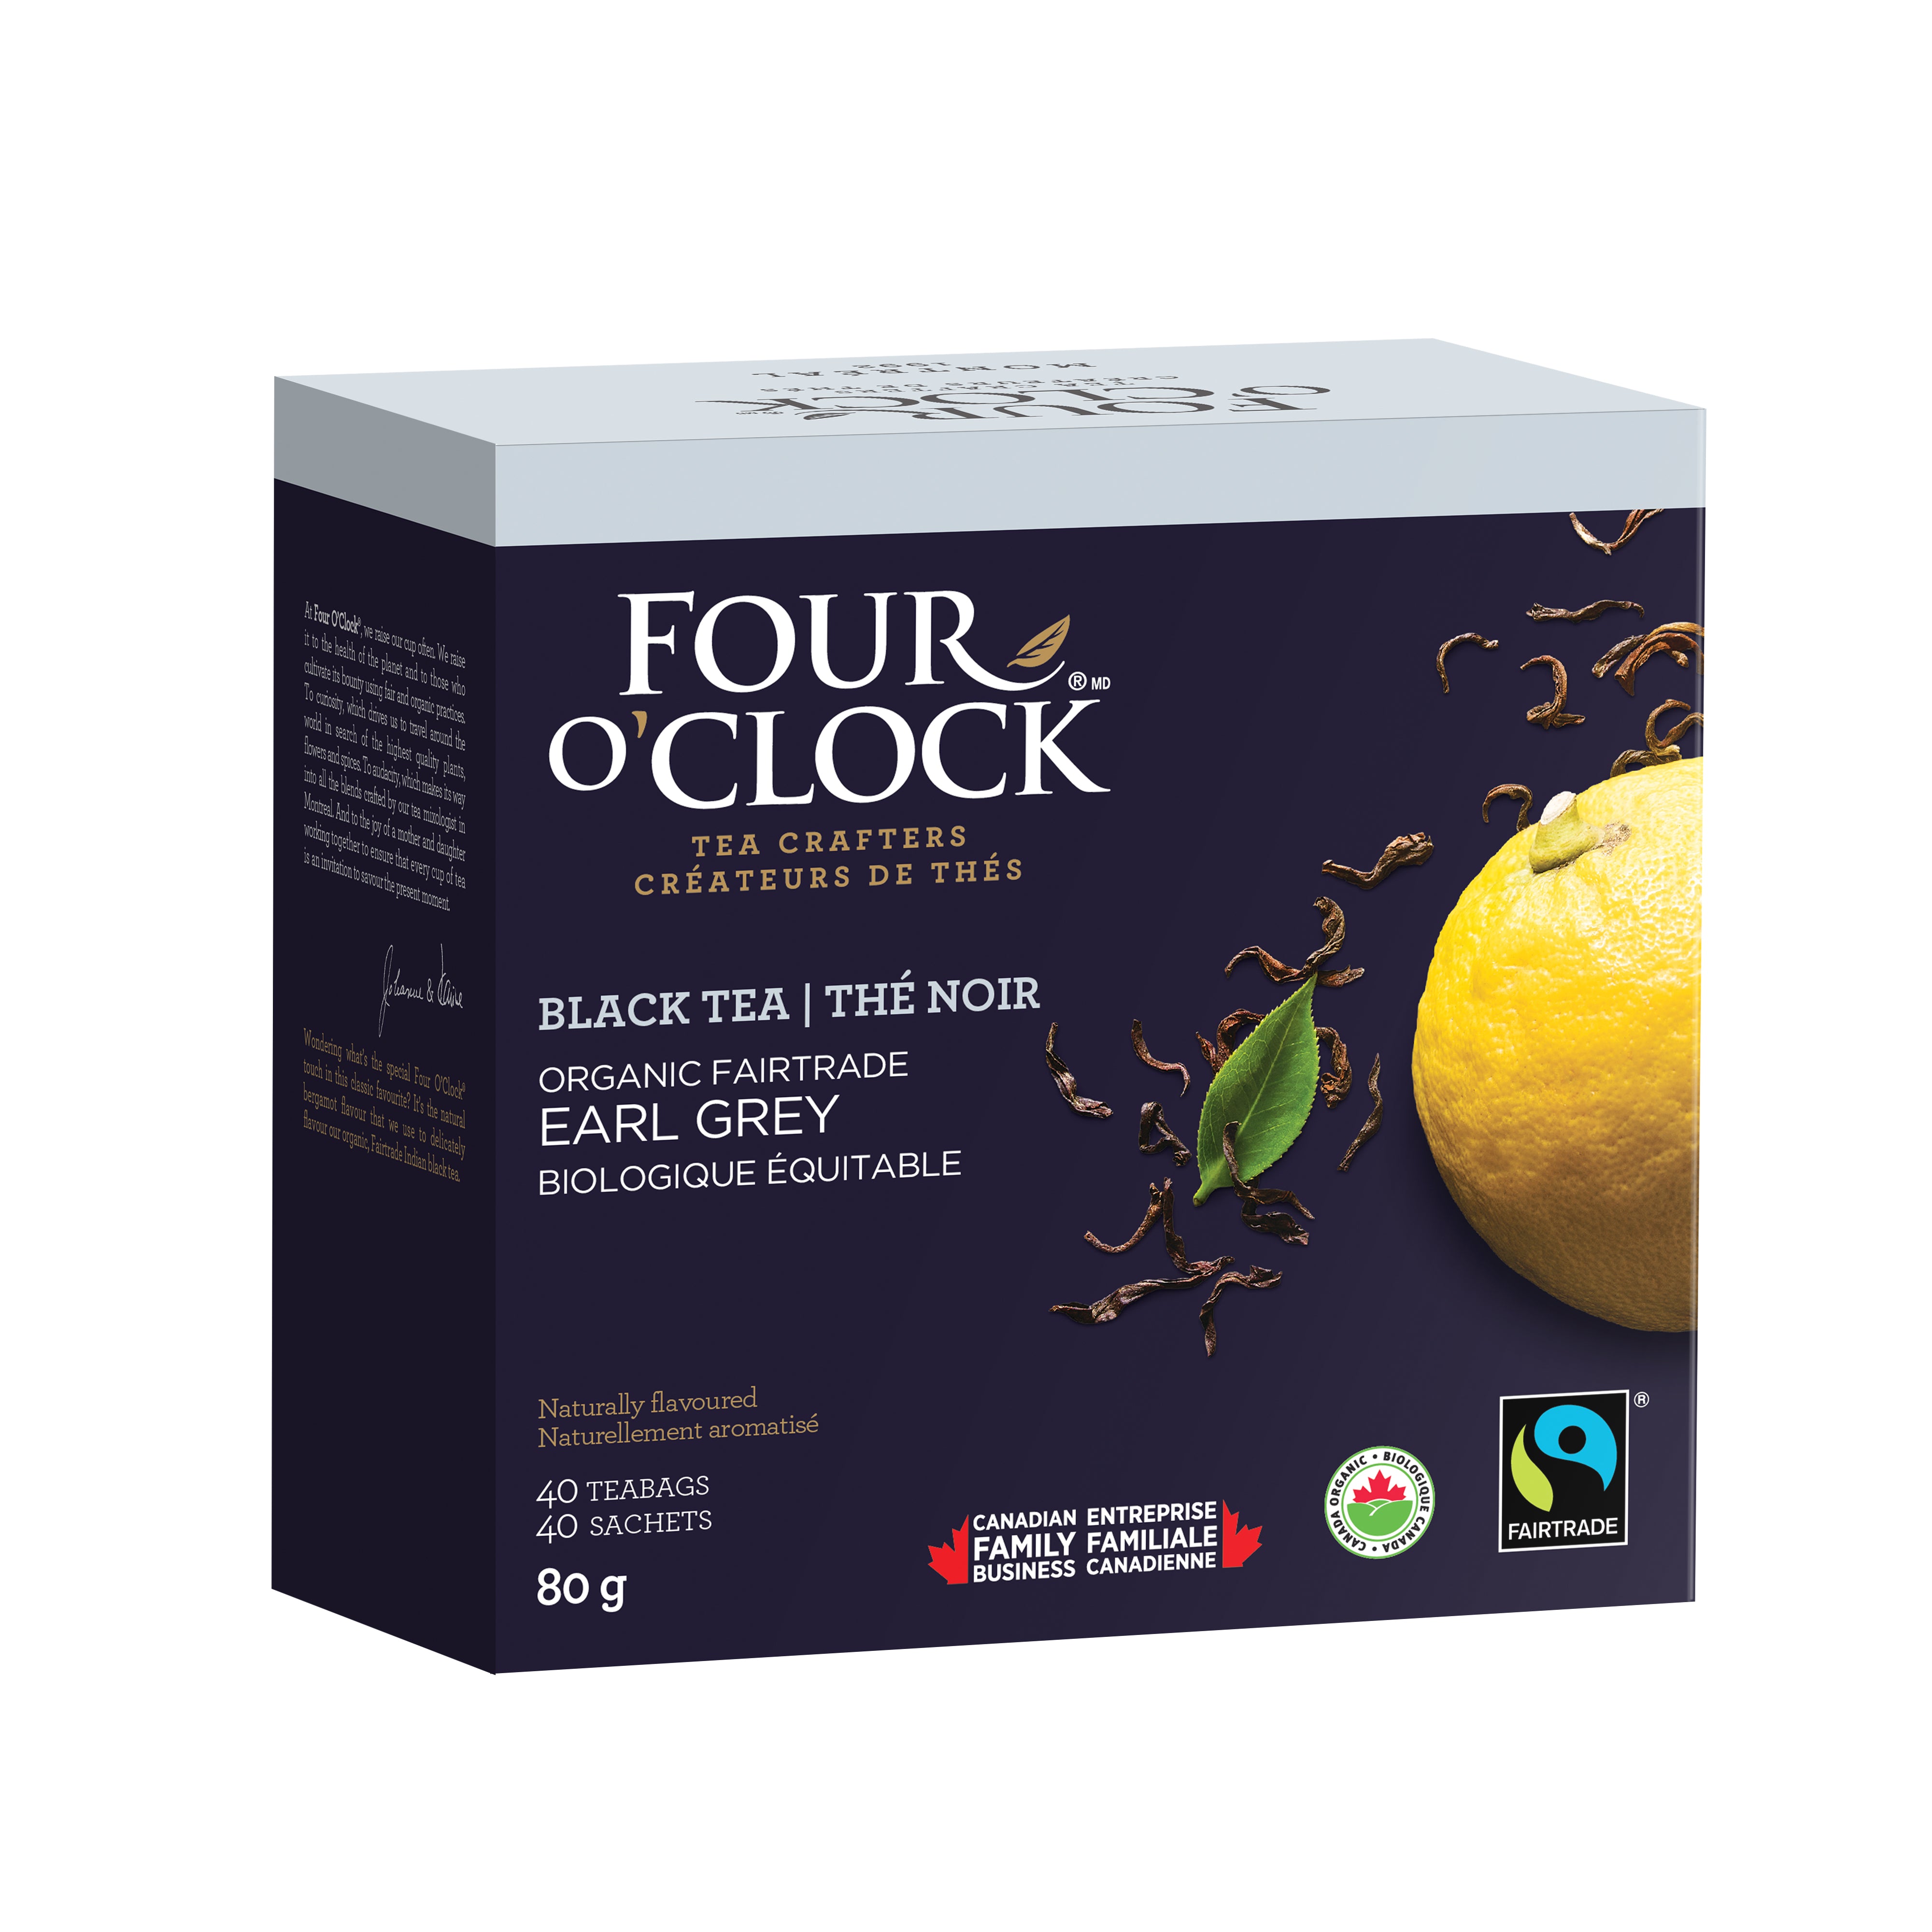 Earl Grey Organic Fairtrade Black Tea, 40 teabags